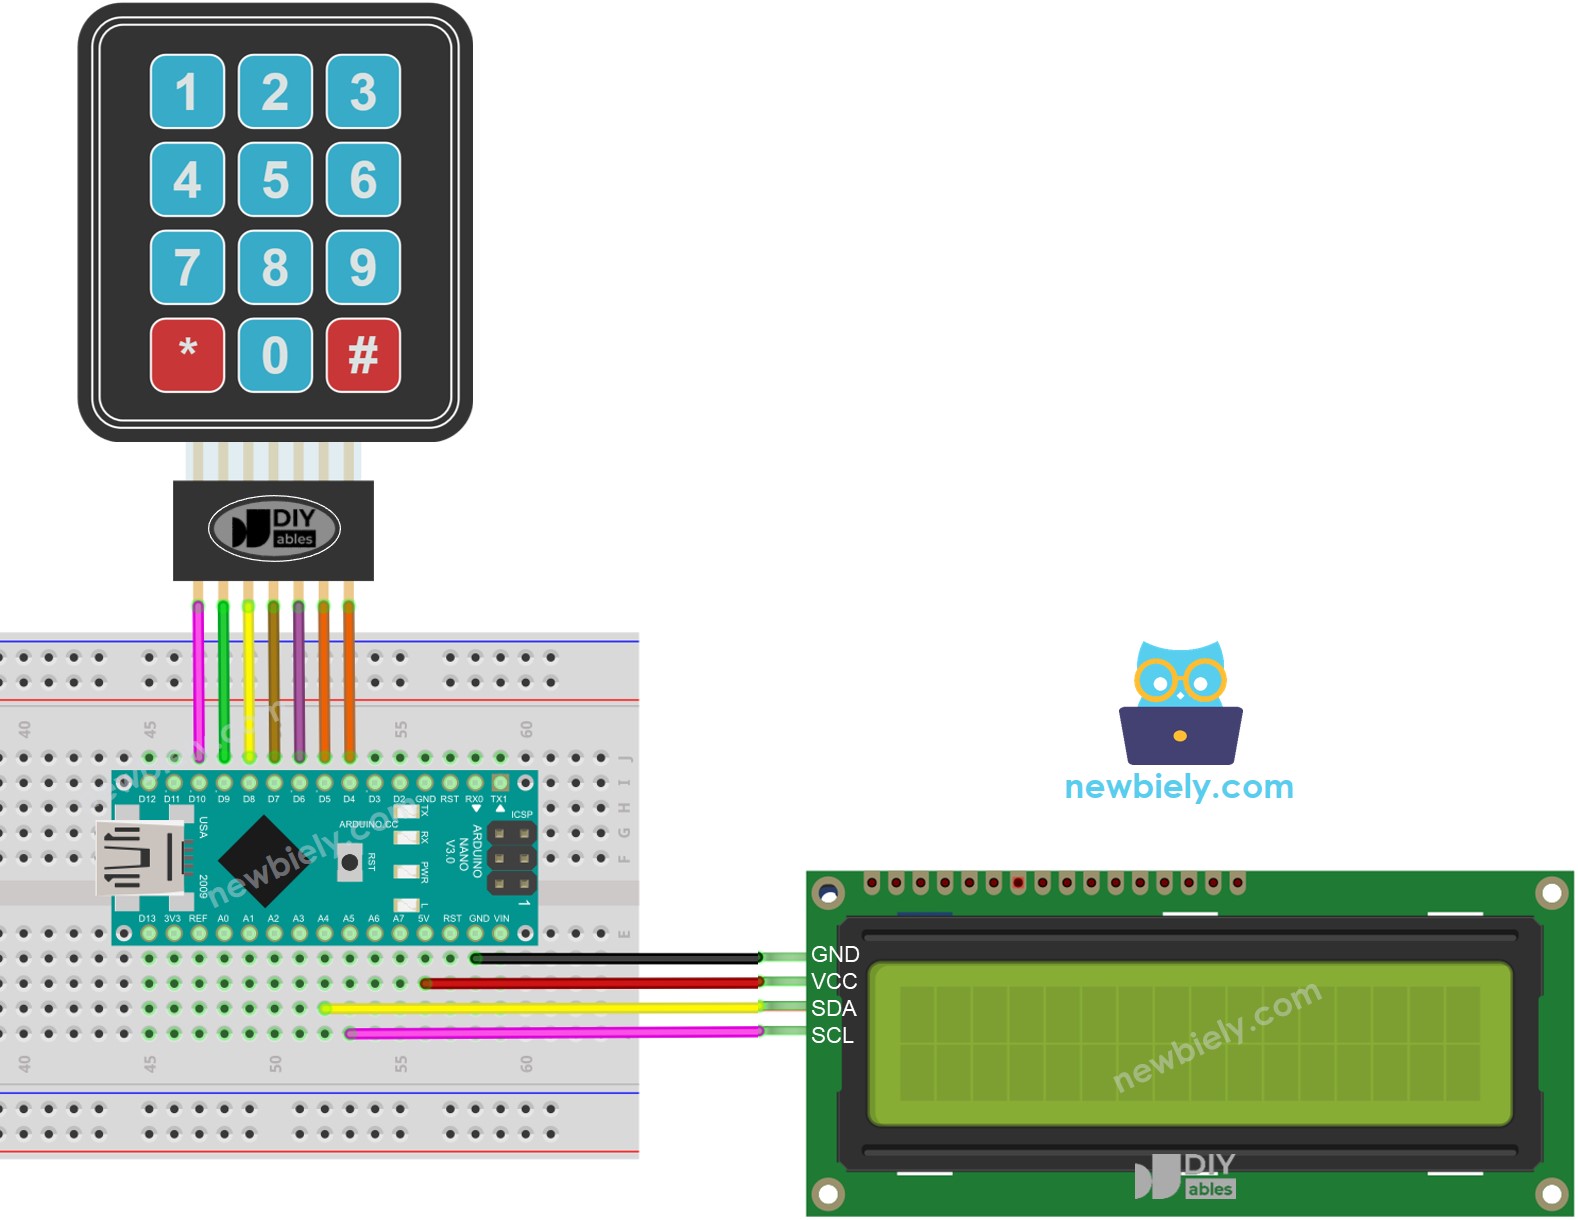 The wiring diagram between Arduino Nano and Keypad LCD